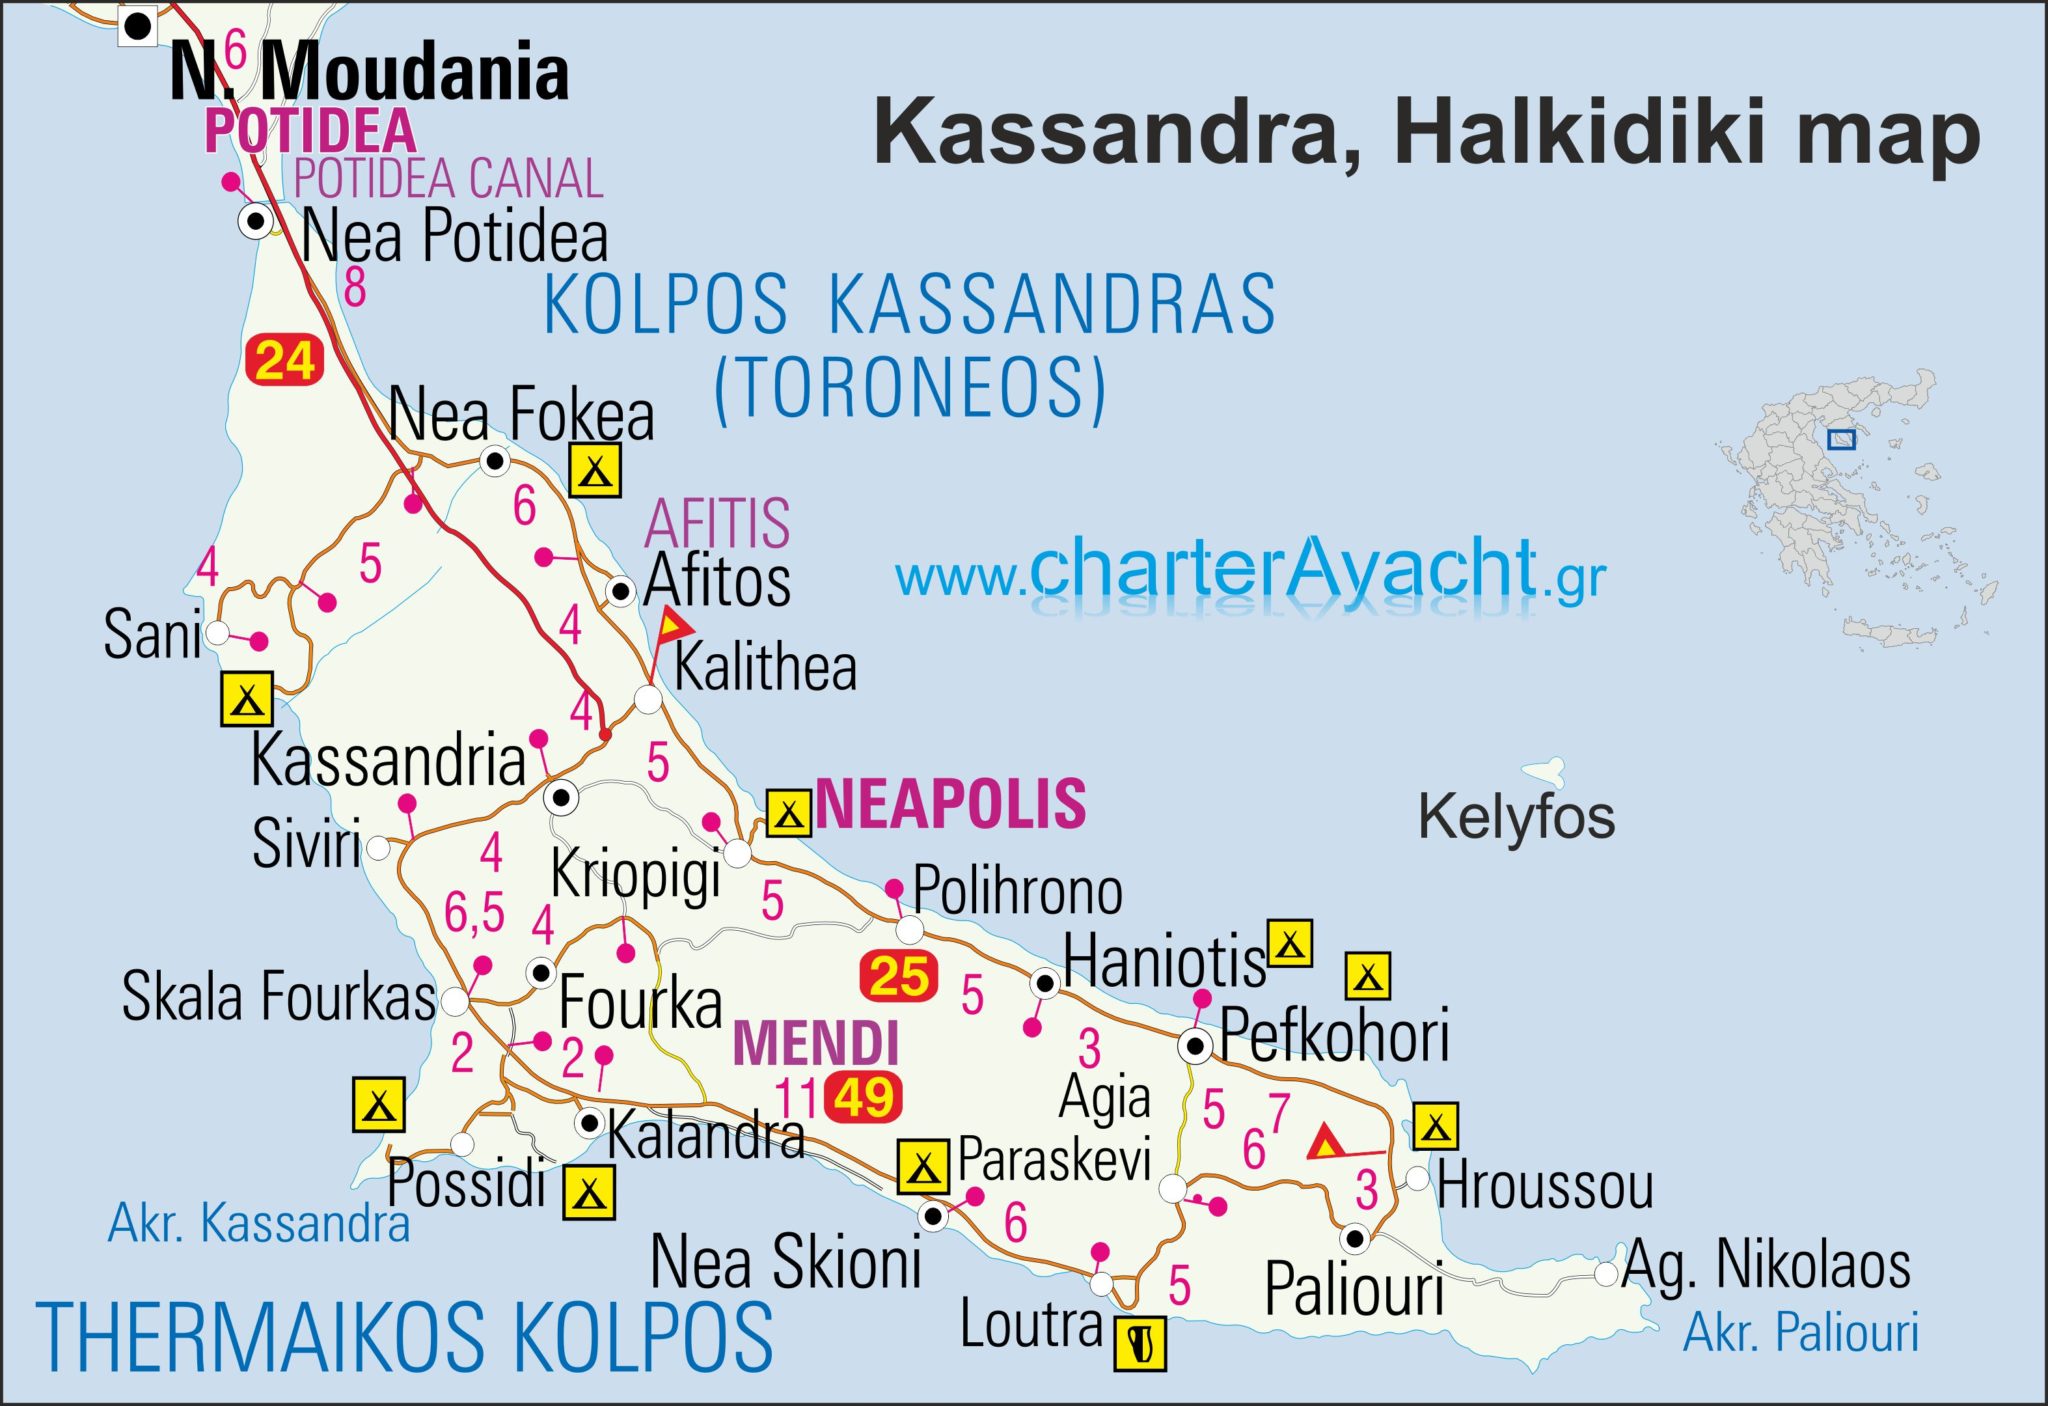 mapa halkidiki Maps   Halkidiki maps : Halkidiki sailing boat trips & N. Sporades  mapa halkidiki